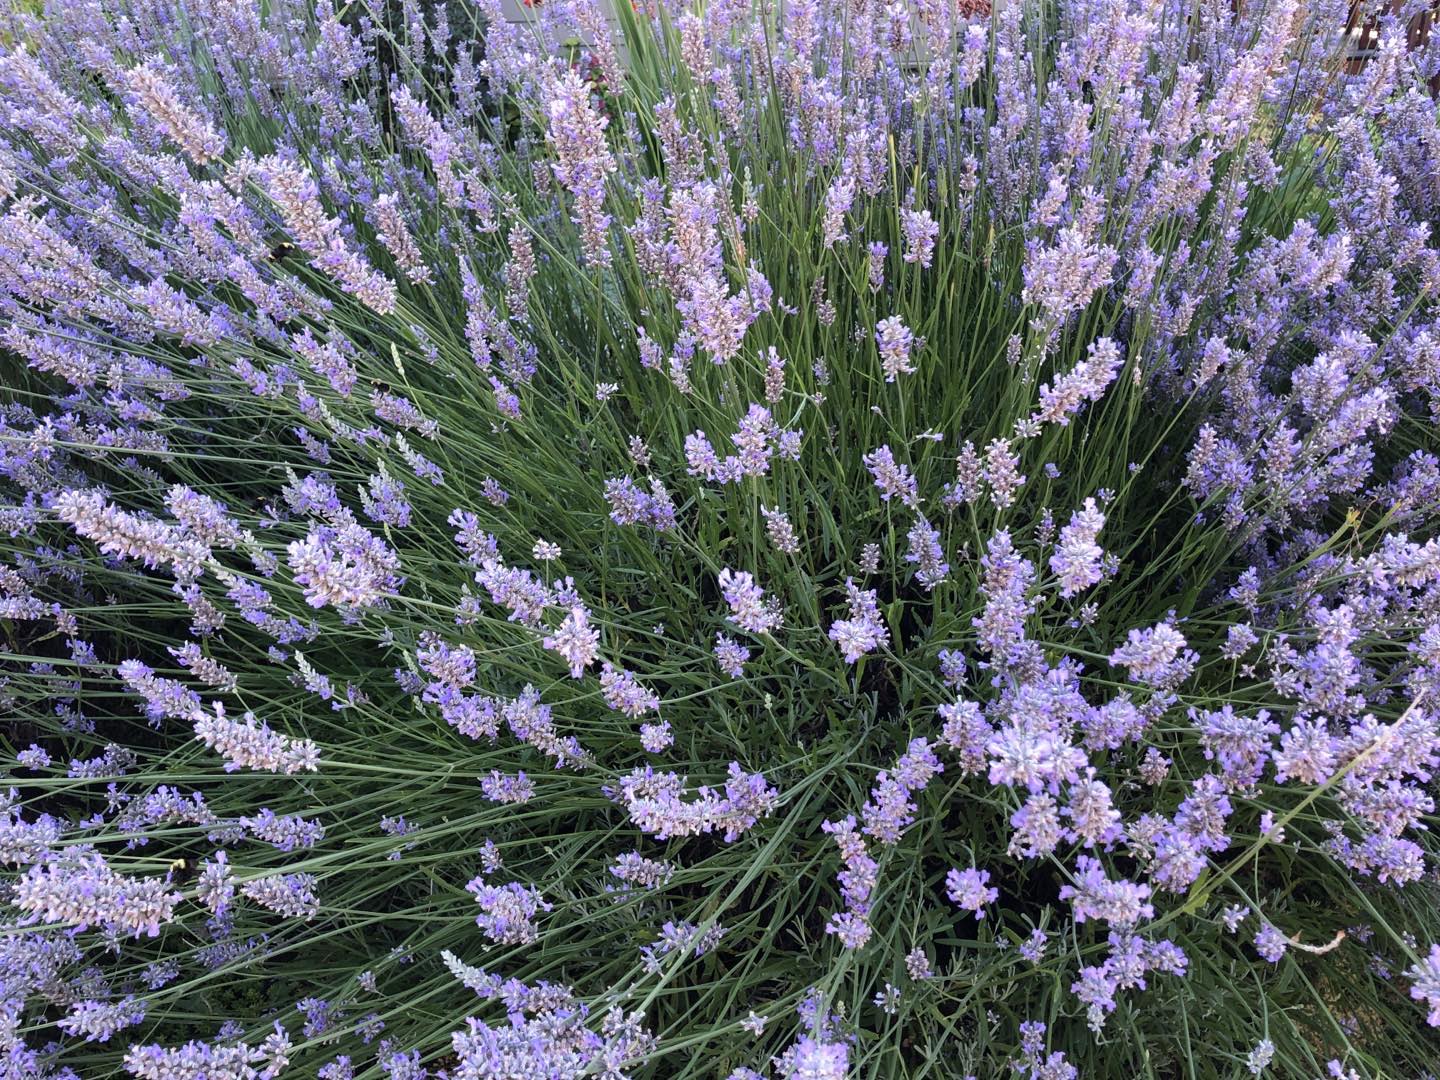 Pure purple delight
-
-
#purple #lavender #englishlavender #levendula #gardens #flowers #flowersofinsta #lilavirág #ourneighborhood #myseattlepictures🌿